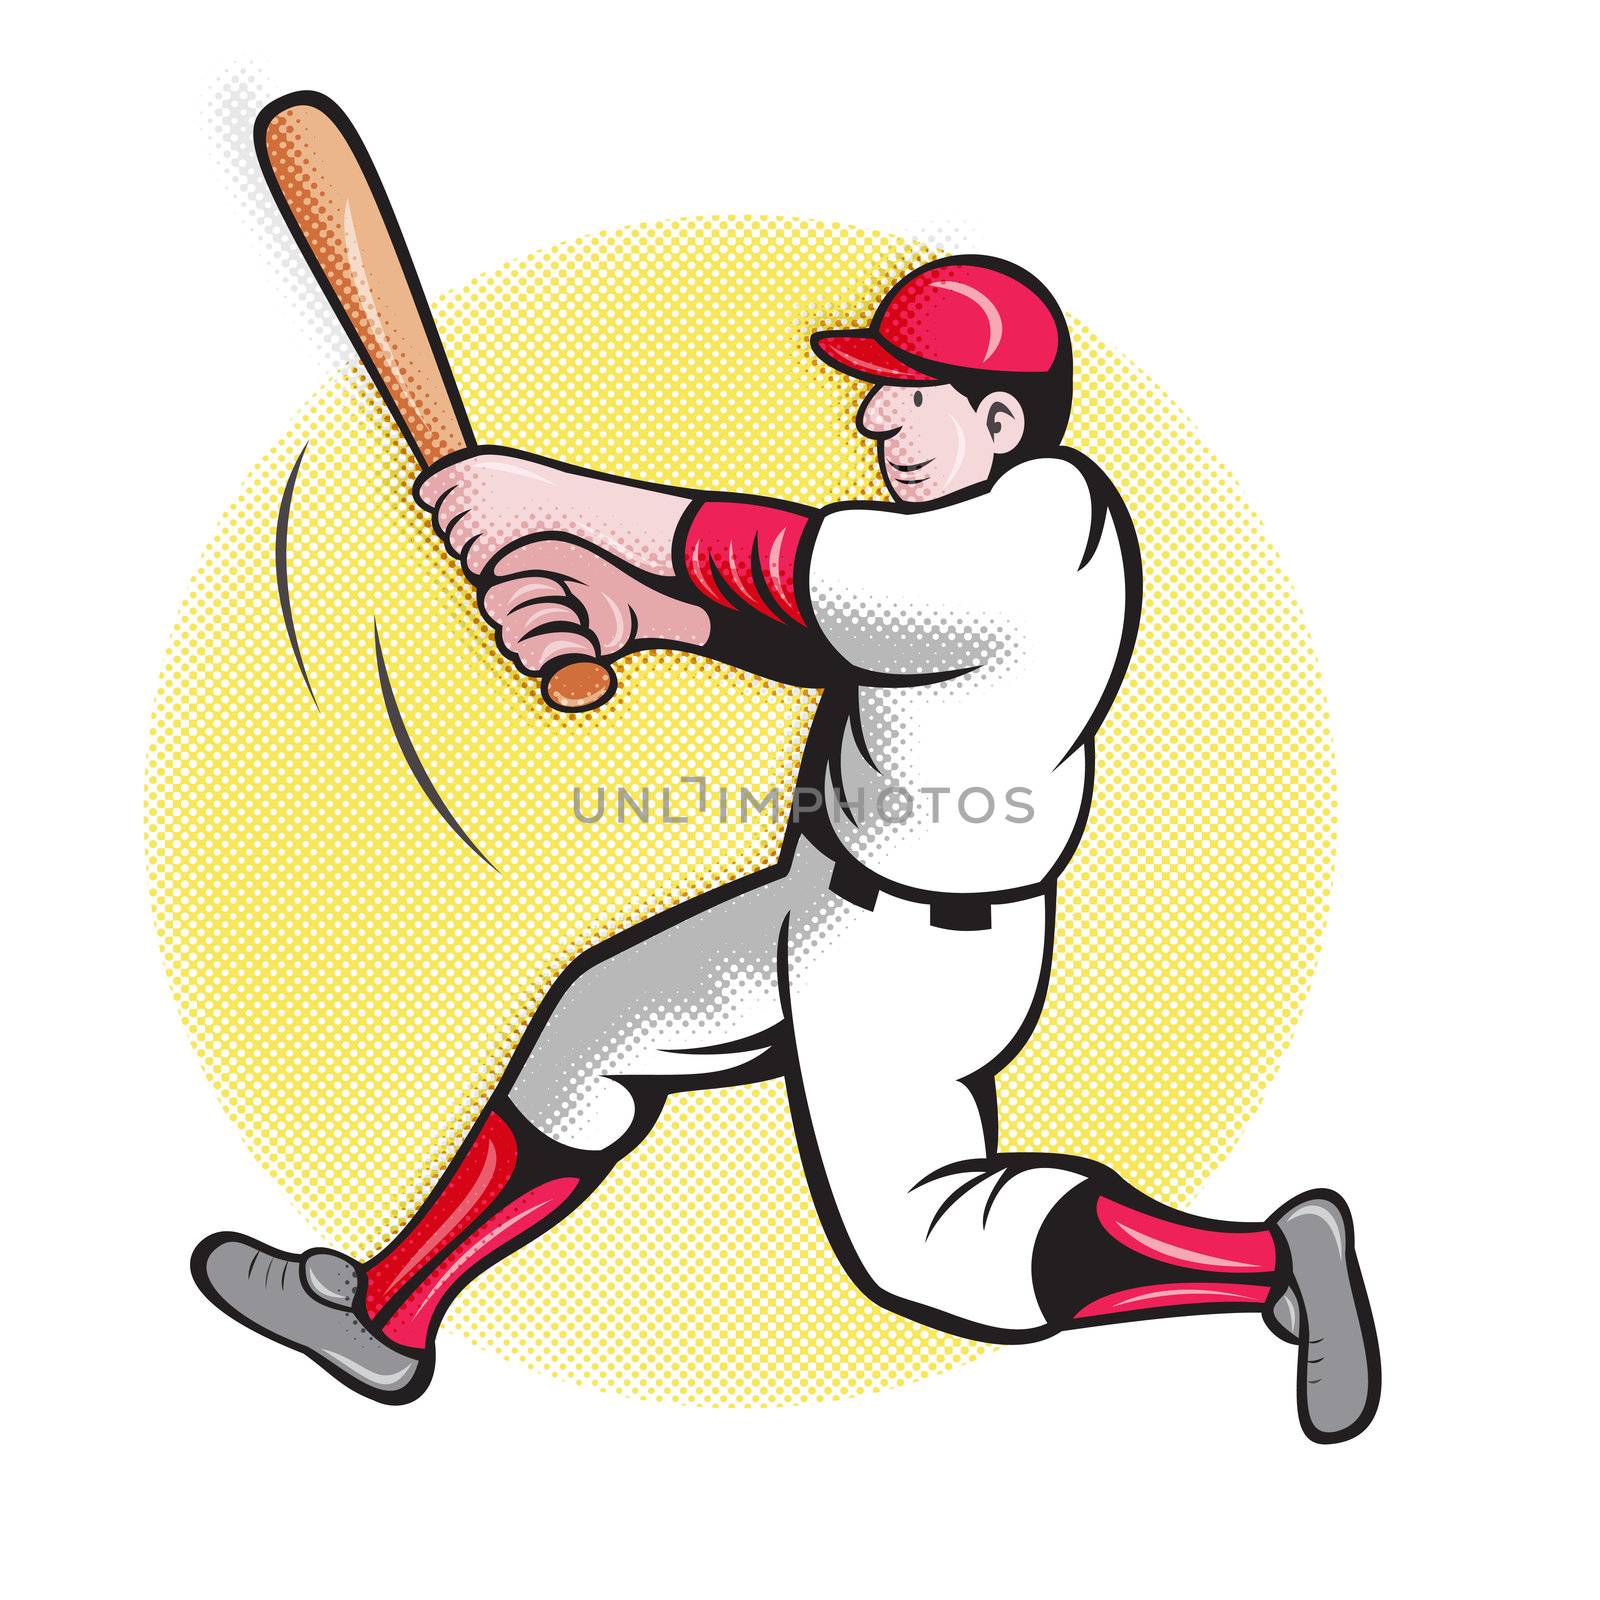 baseball player batting cartoon style by patrimonio